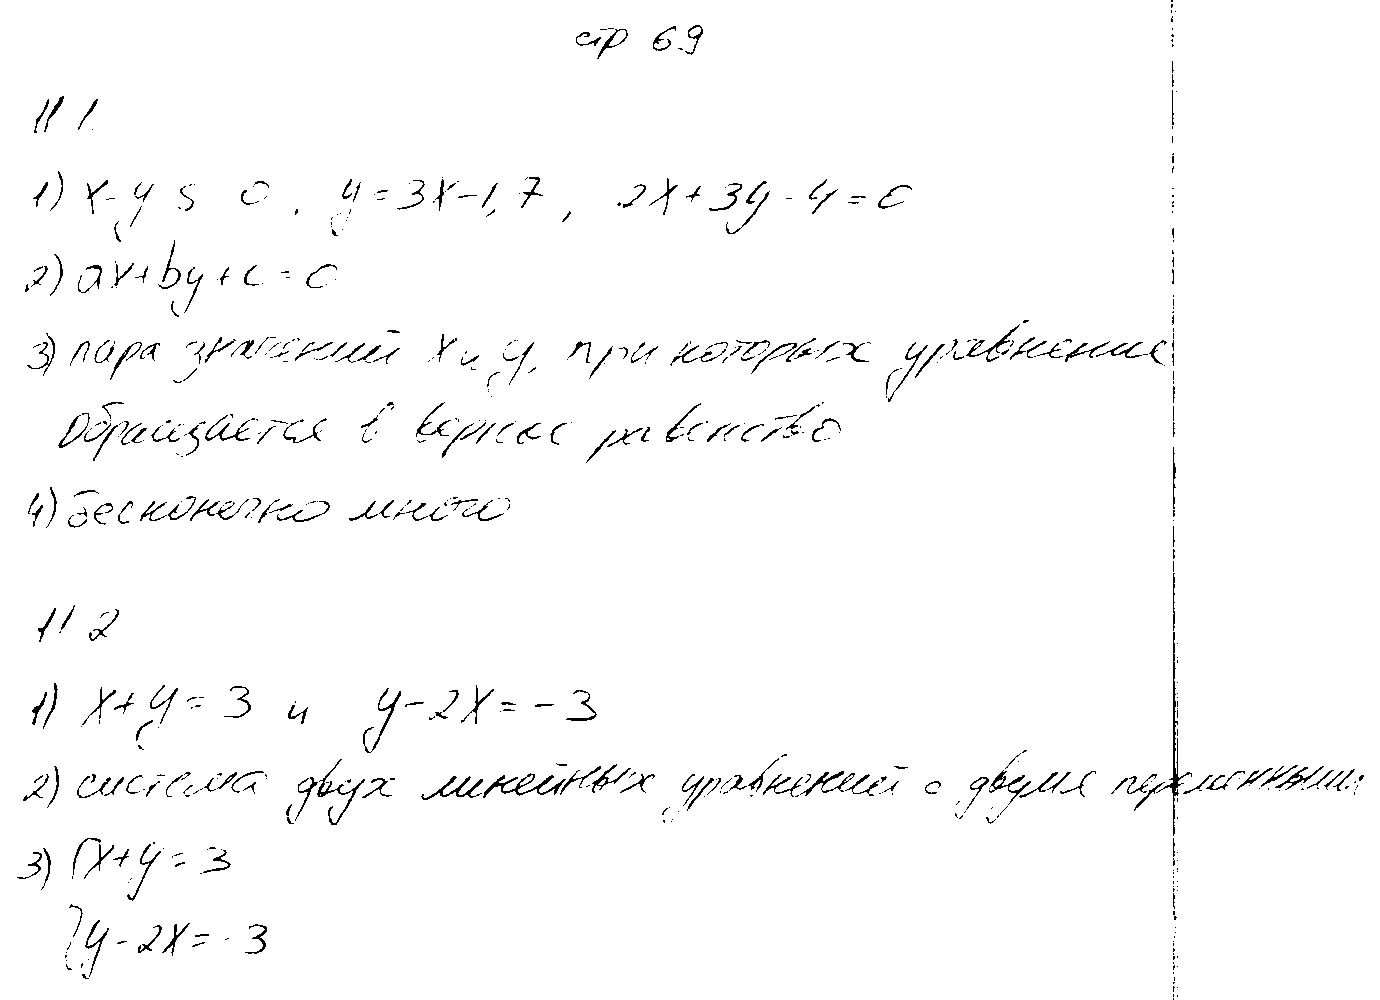 ГДЗ Алгебра 7 класс - стр. 69